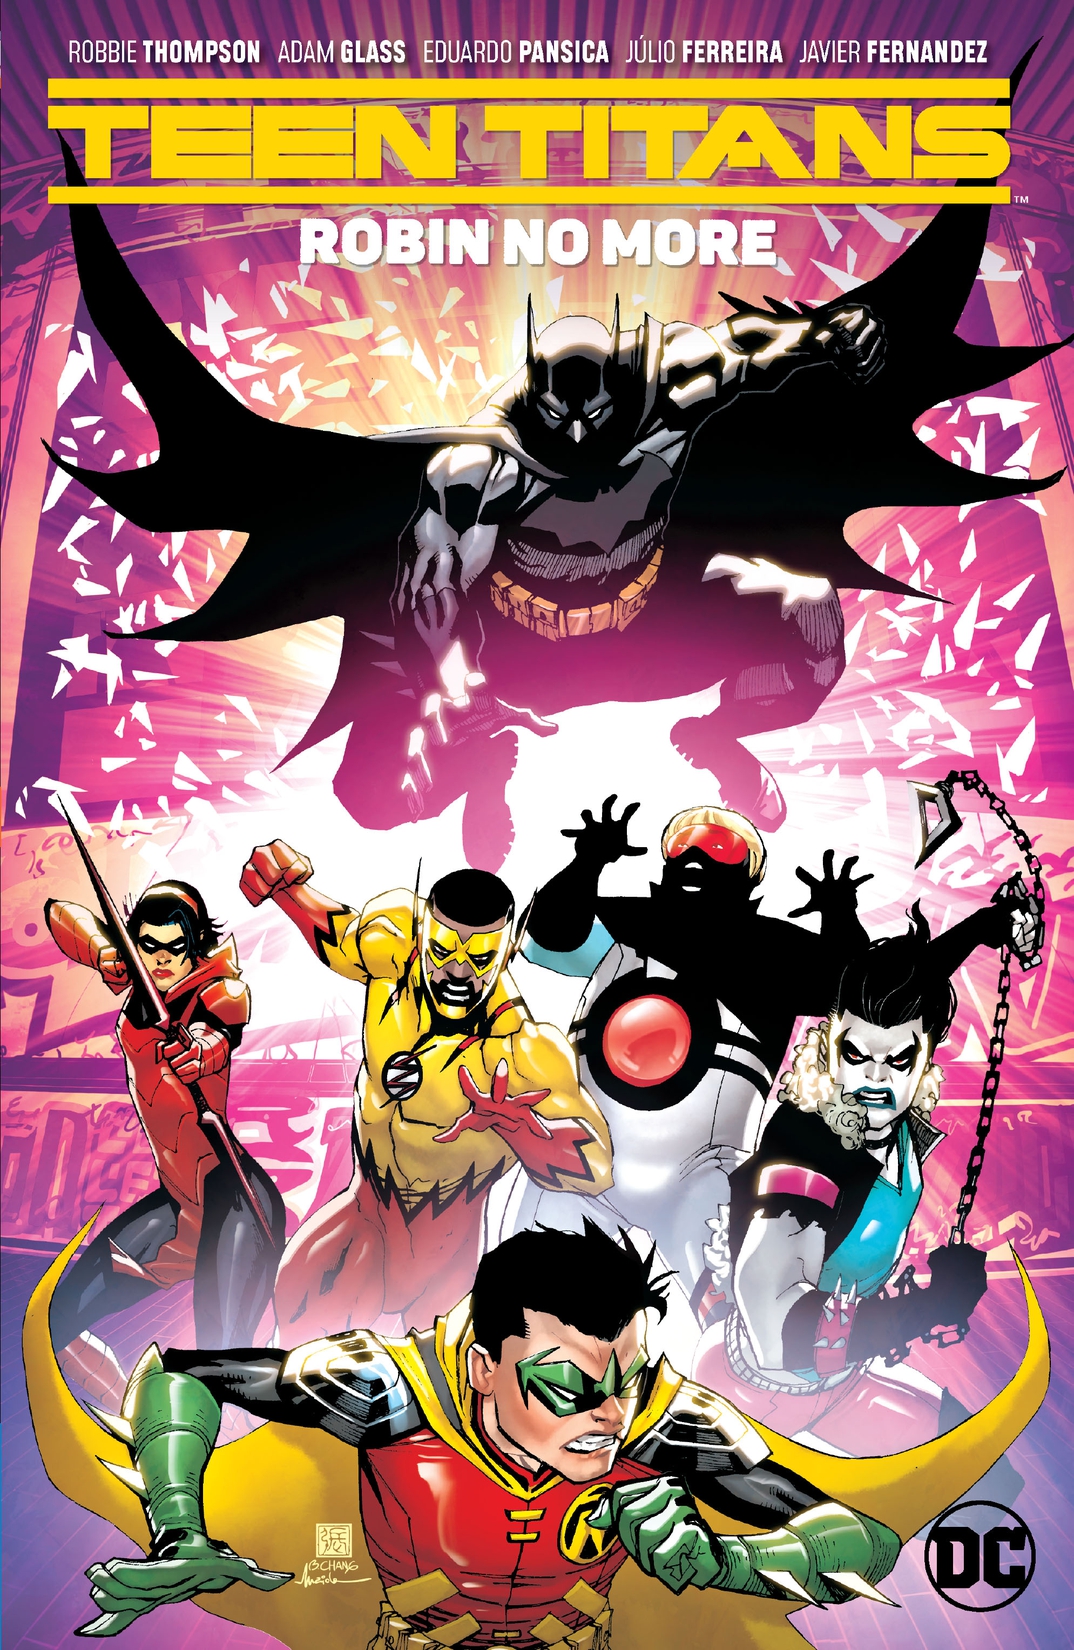 Teen Titans Vol. 4: Robin No More preview images